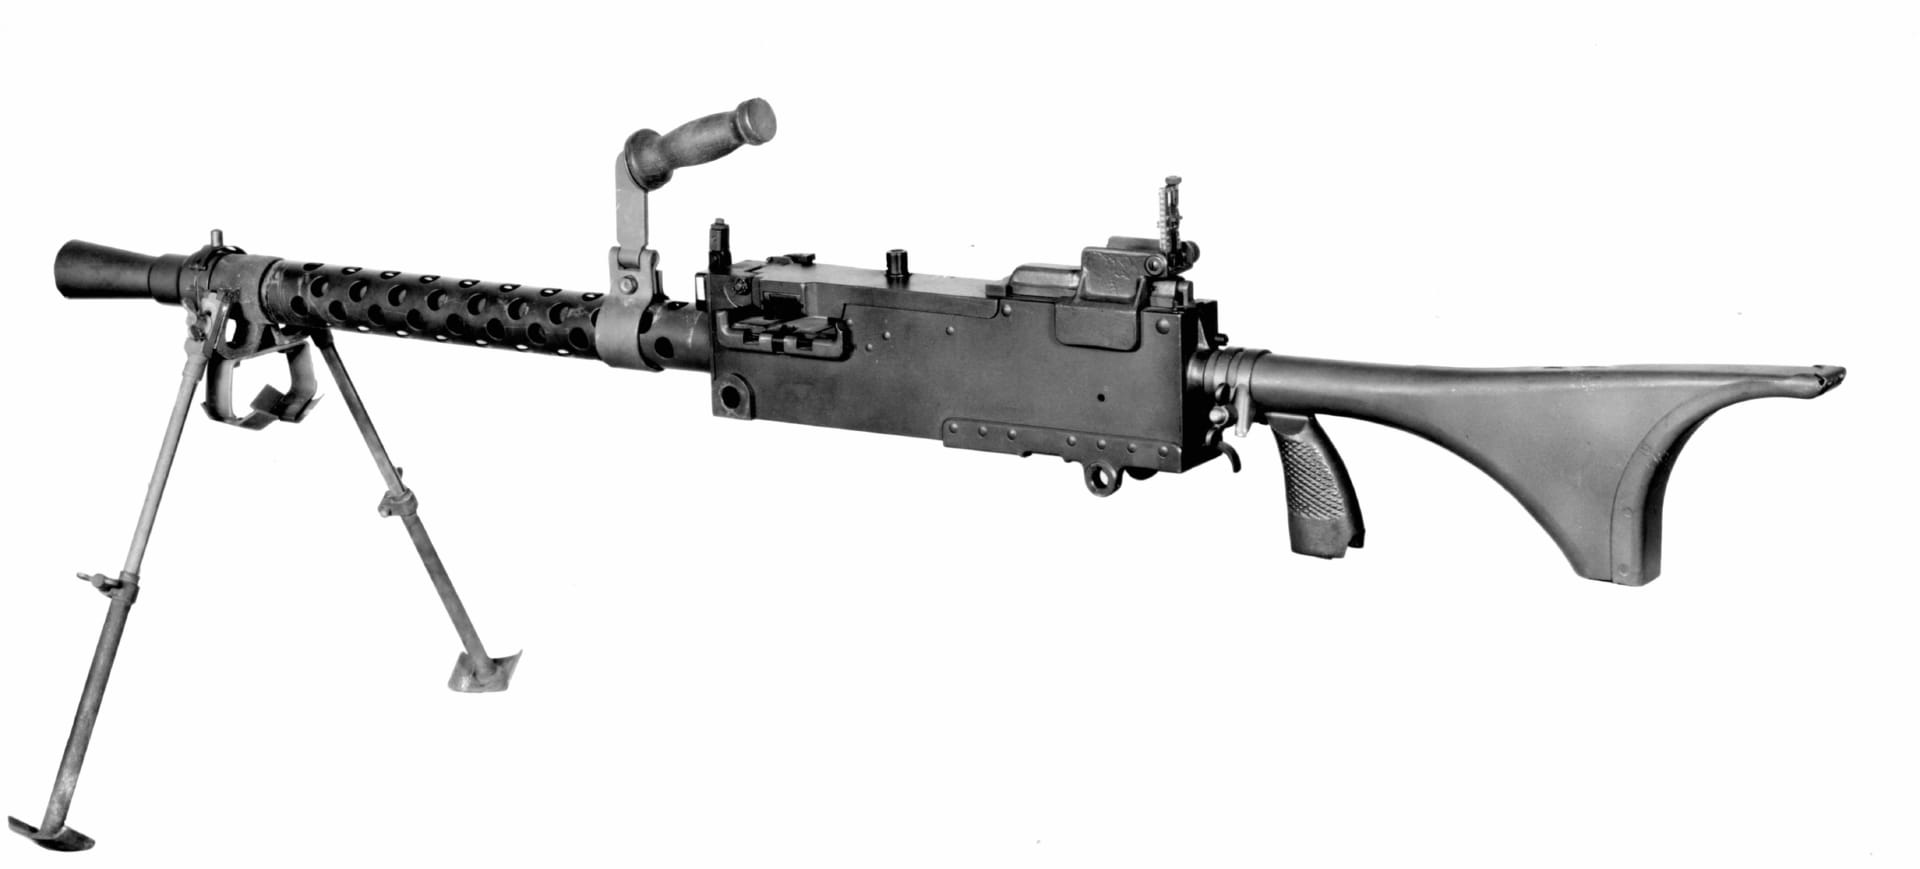 M1919 Browning machine gun at 2048 x 2048 iPad size wallpapers HD quality